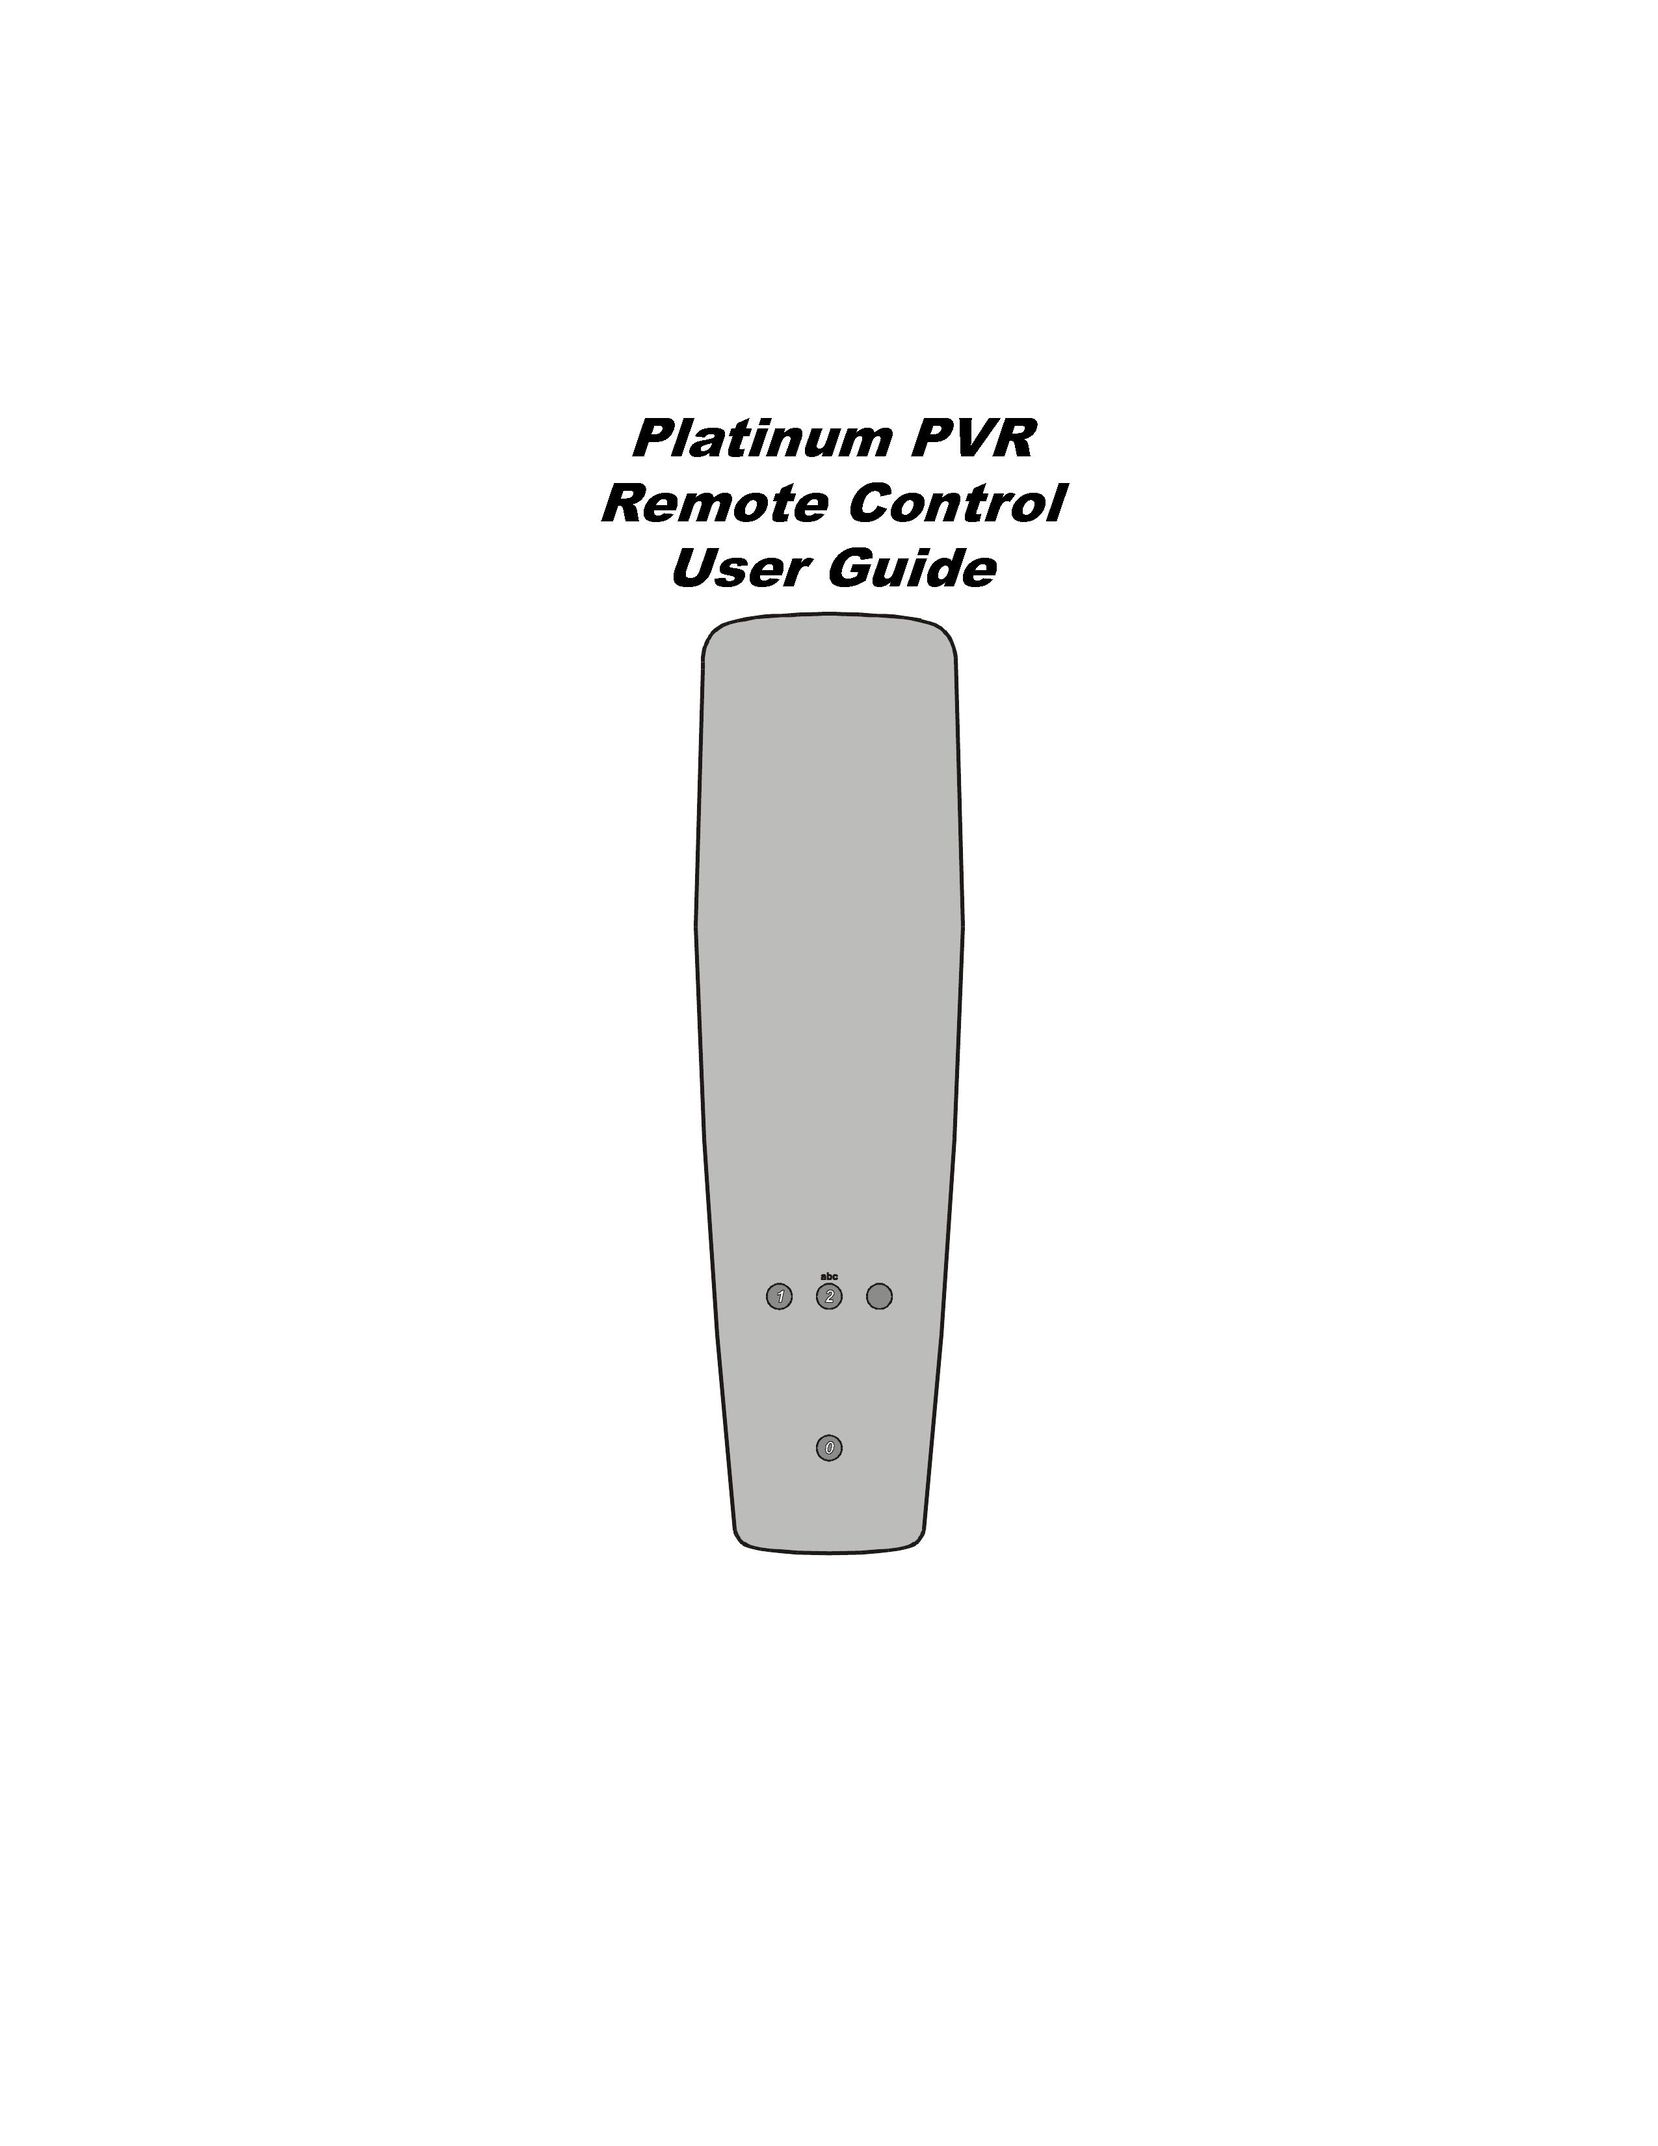 Grundig Platinum PVR Remote Control Universal Remote User Manual